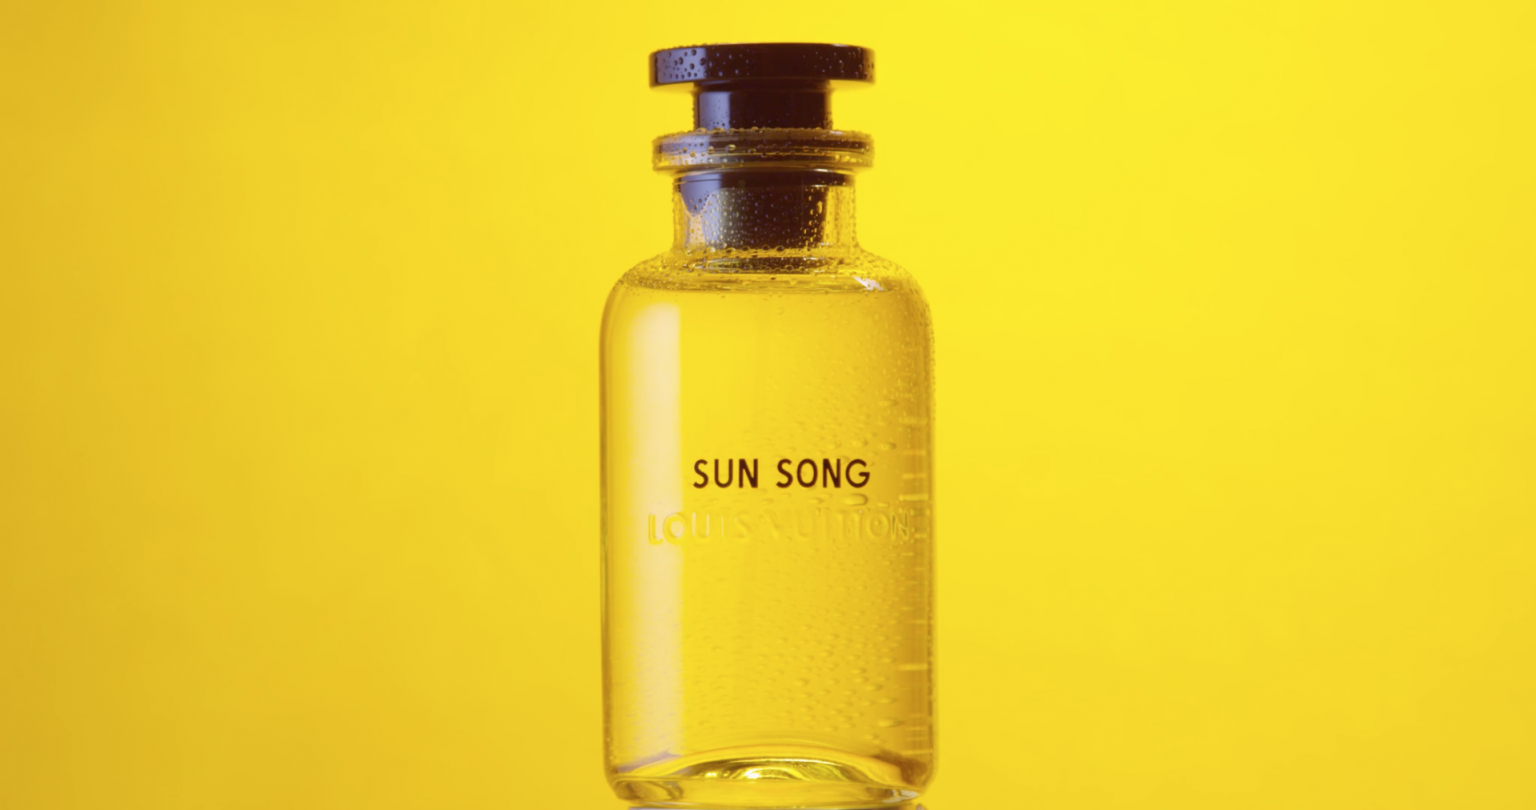 LOUIS VUITTON SUN SONG – Rich and Luxe